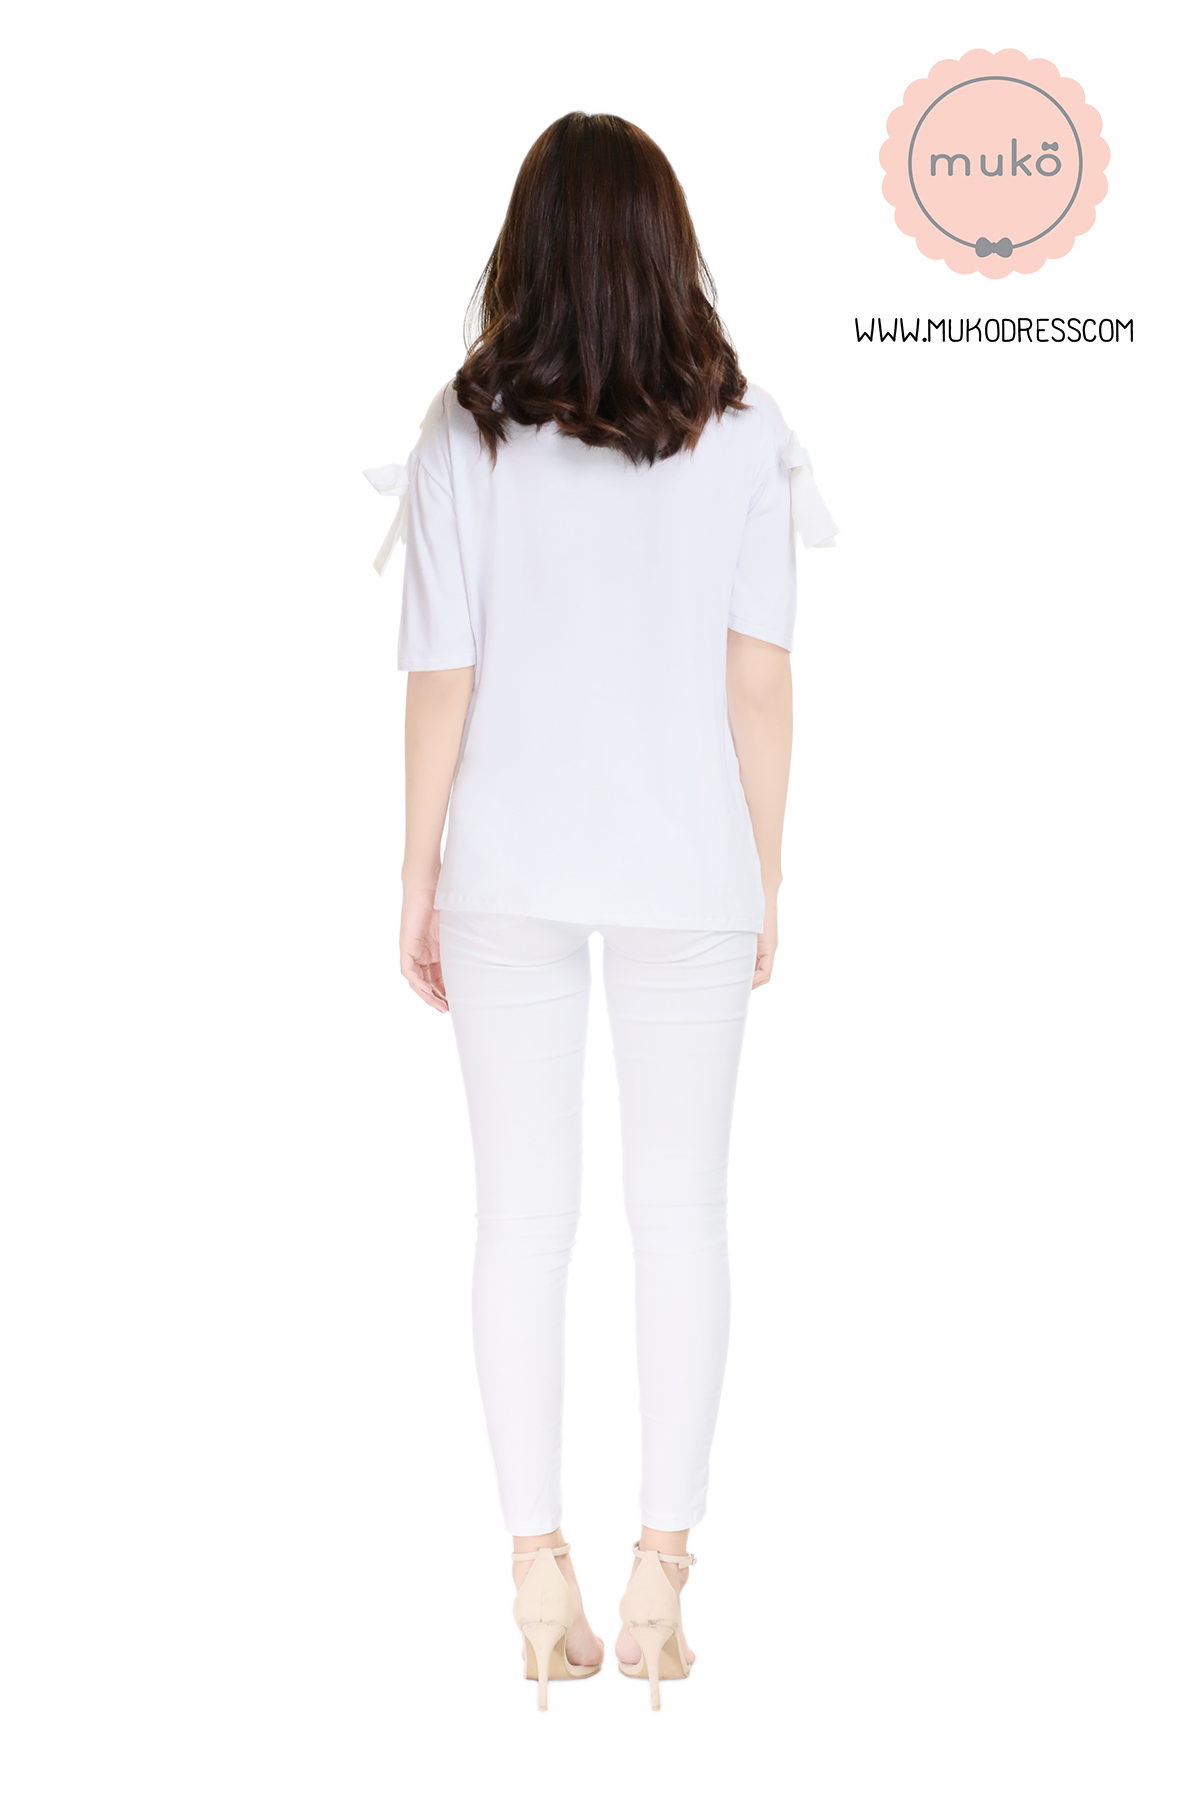 Muko Cher เสื้อเปิดให้นม TC26-008 สีขาว